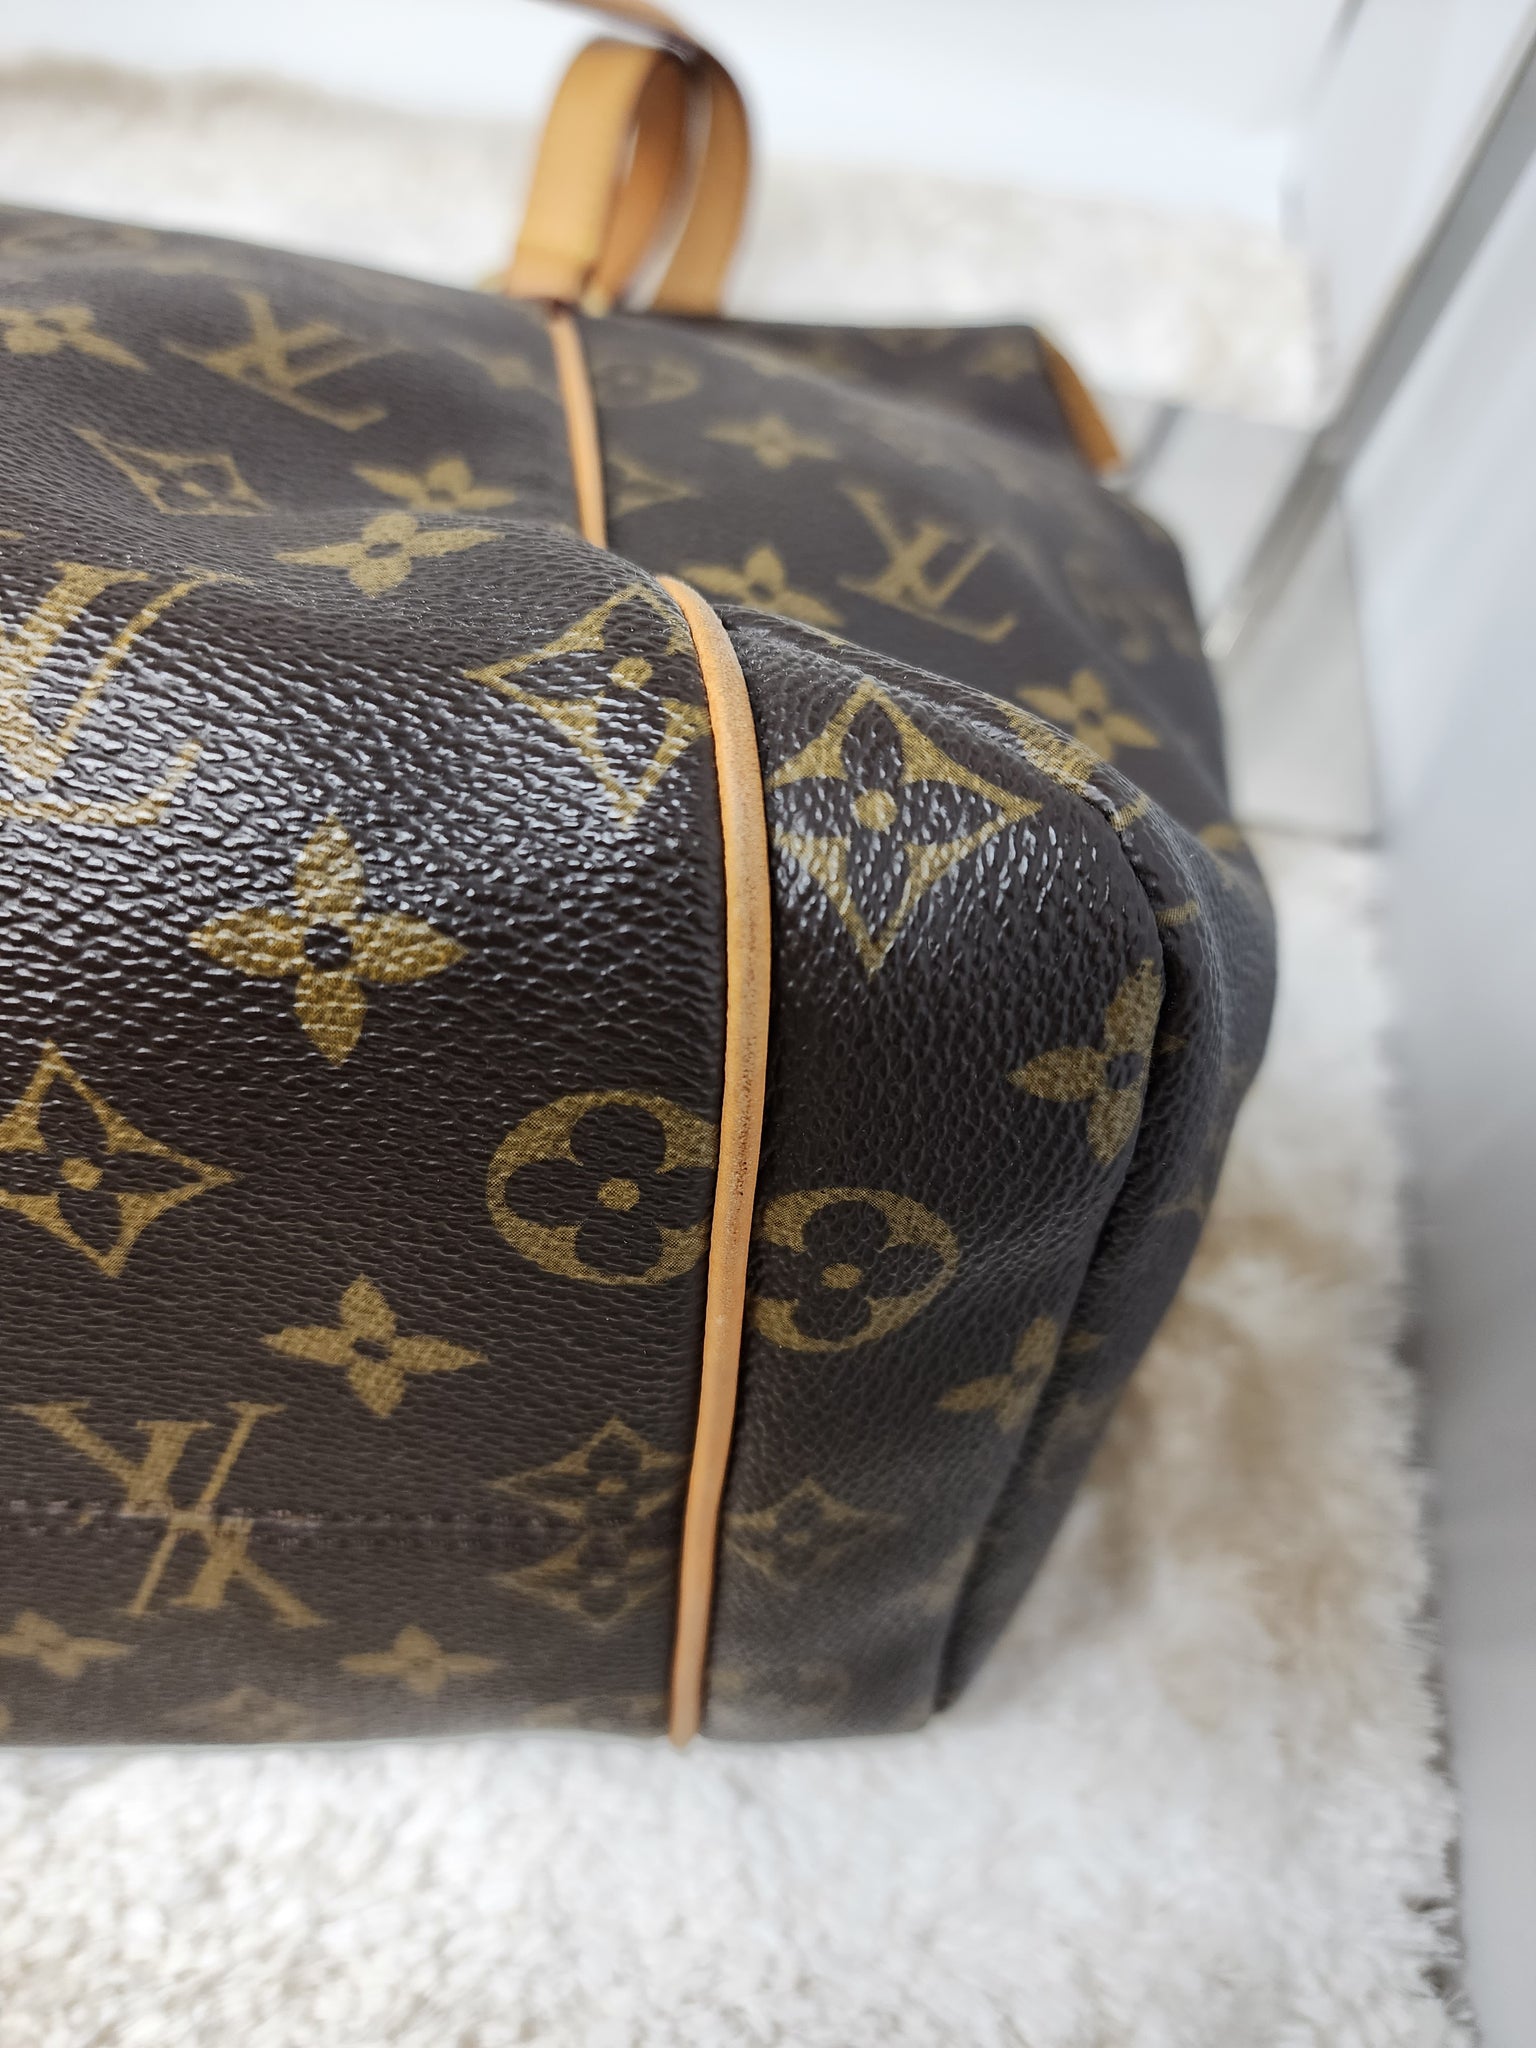 Authentic Louis Vuitton Monogram Babylone Shoulder Tote Bag M51102